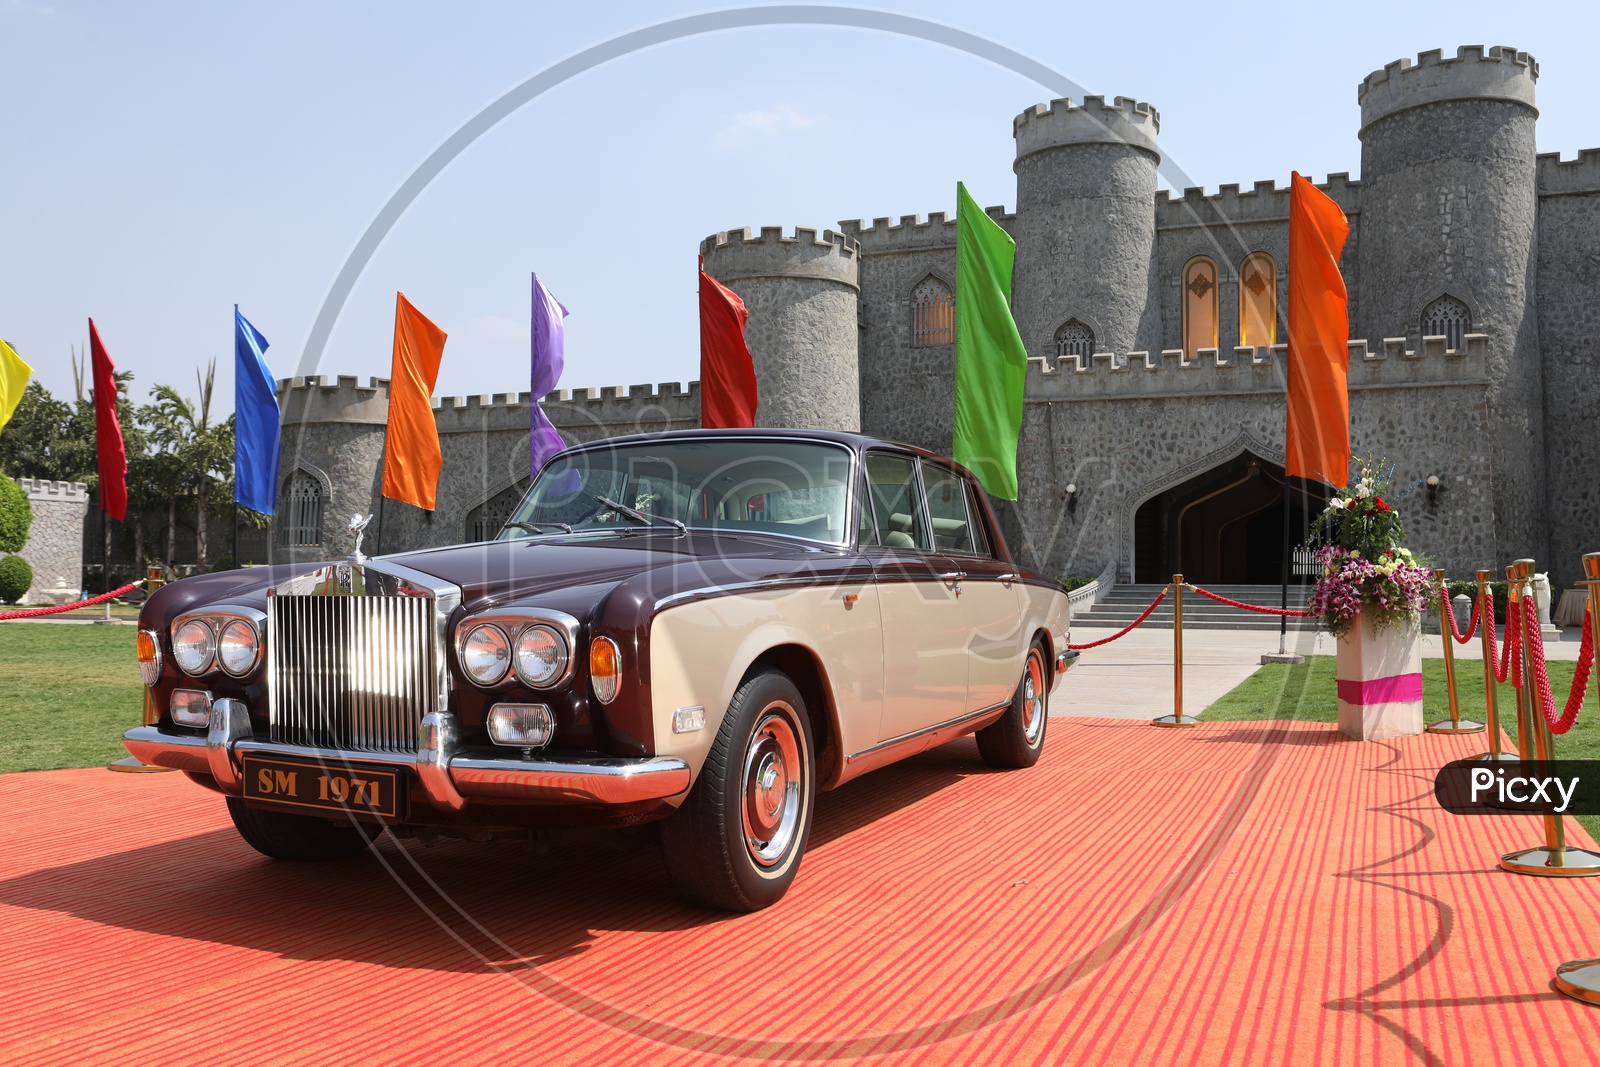 Rolls Royce Car In an Expo